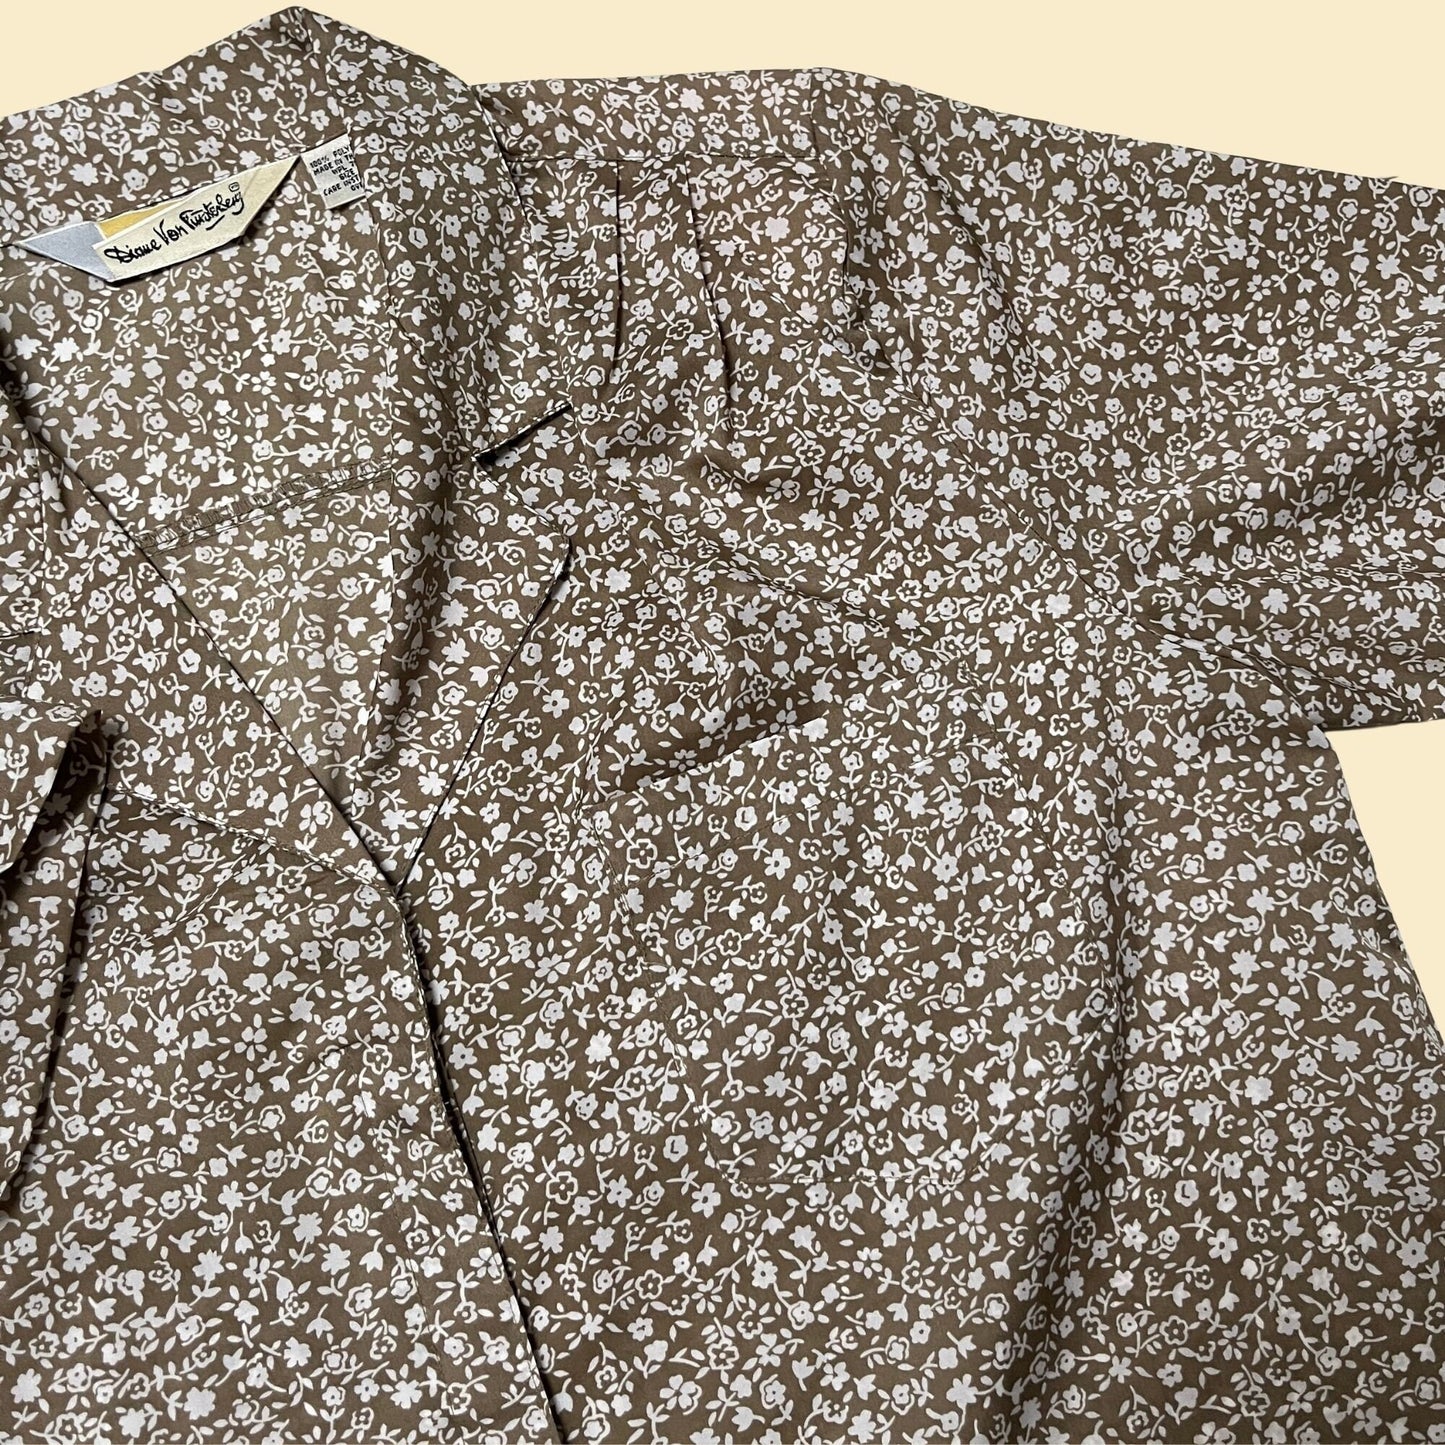 80s Diane Von Furstenberg blouse, vintage olive green and white floral button down, 1980s flower pattern shirt